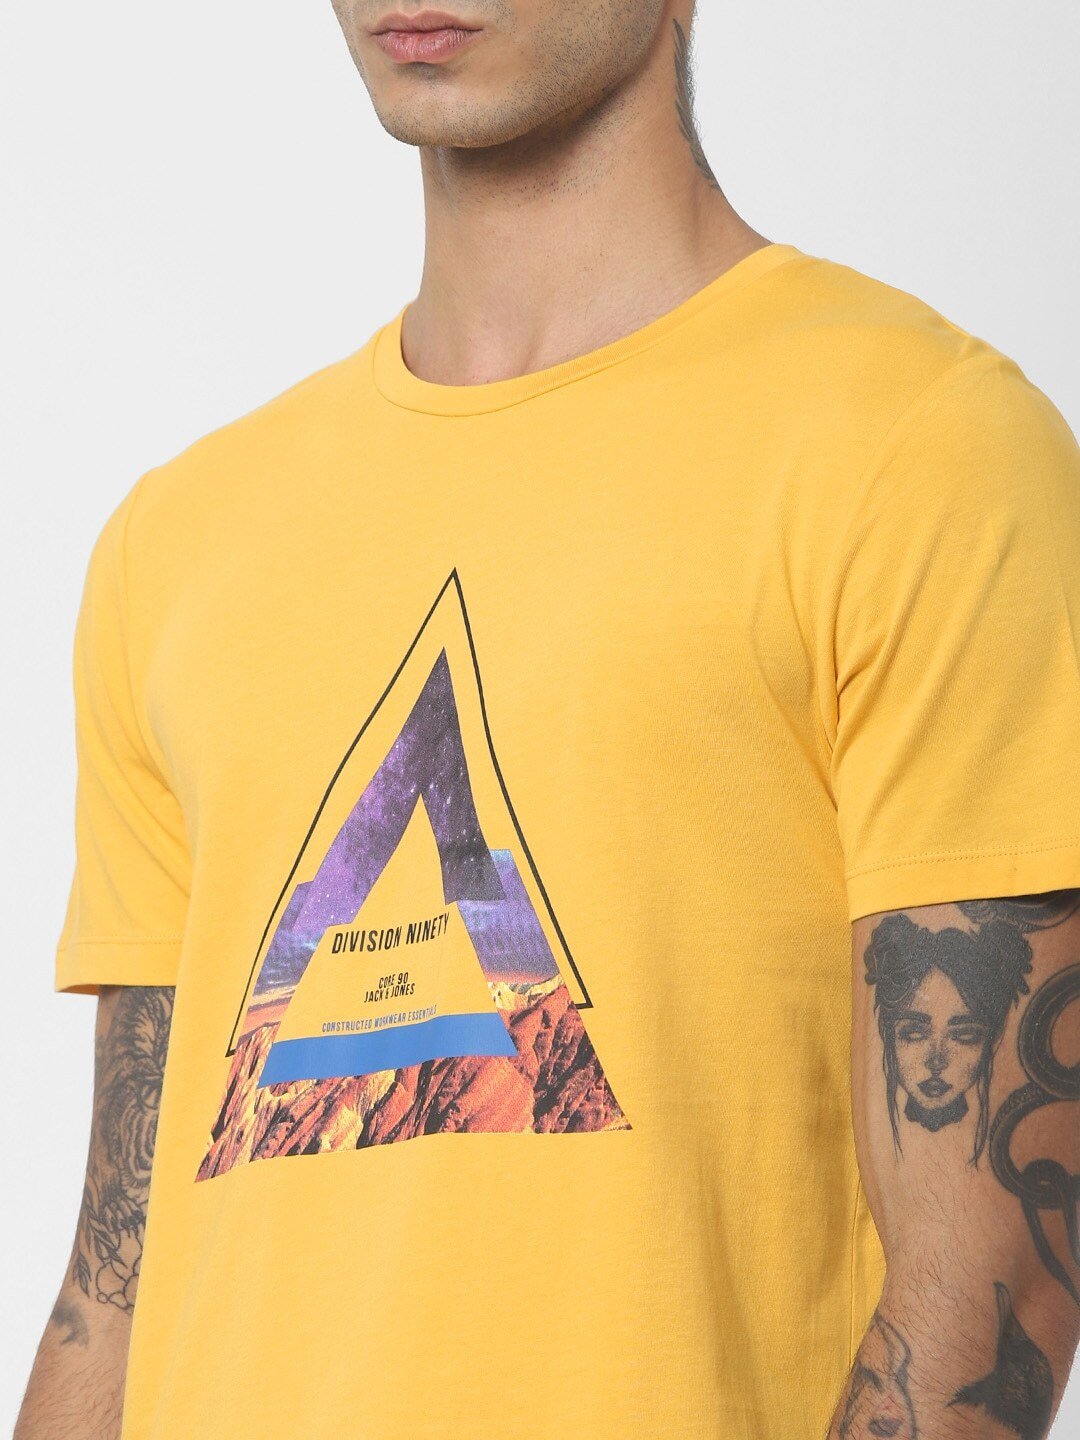 Jack Jones Men Yellow Slim Fit Printed Round Neck Sustainable Pure Cotton T-shirt-2118662